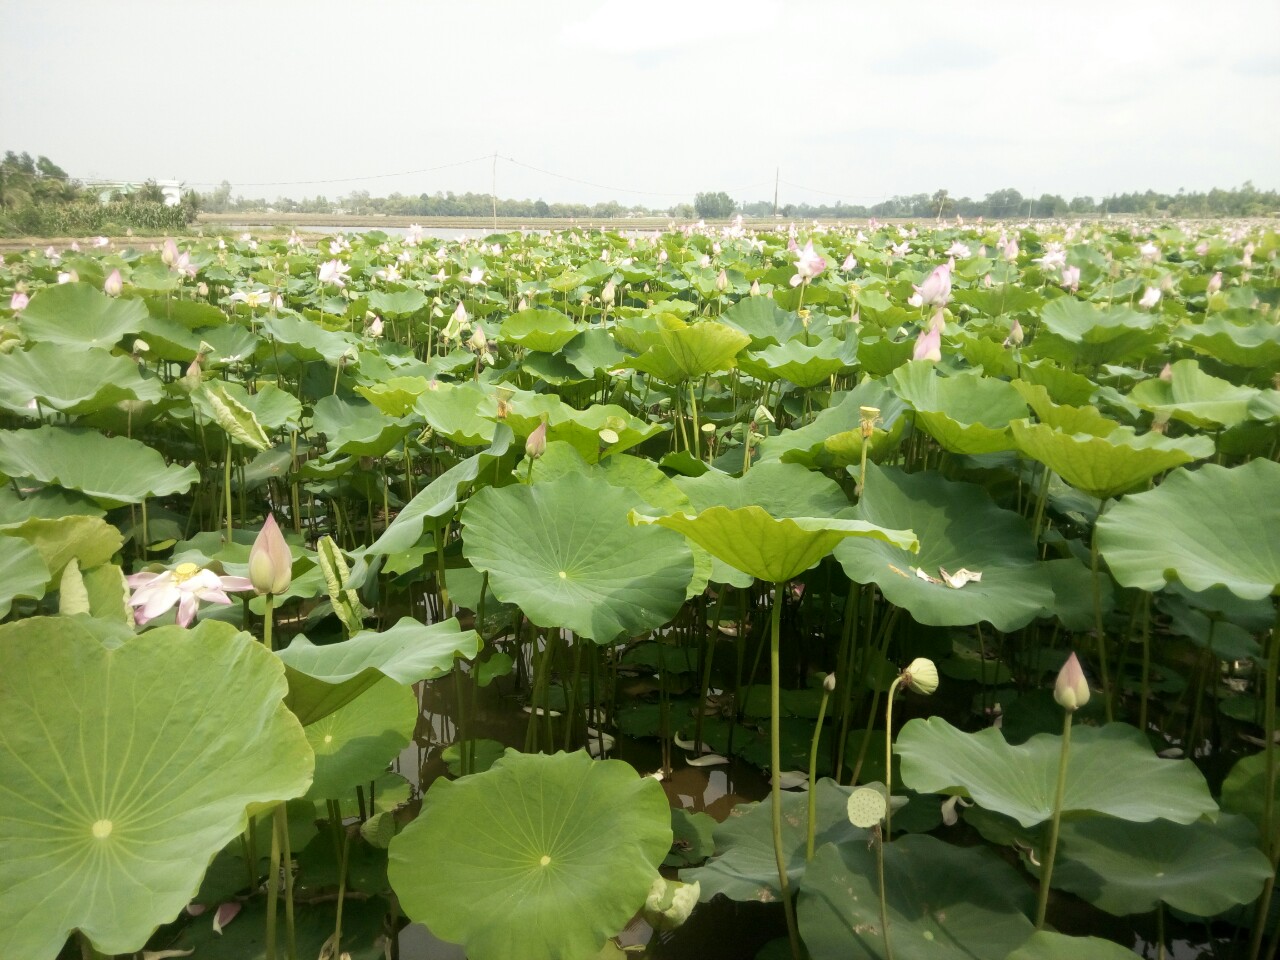 Lotus farm in the Mekong Delta, Viet Nam 